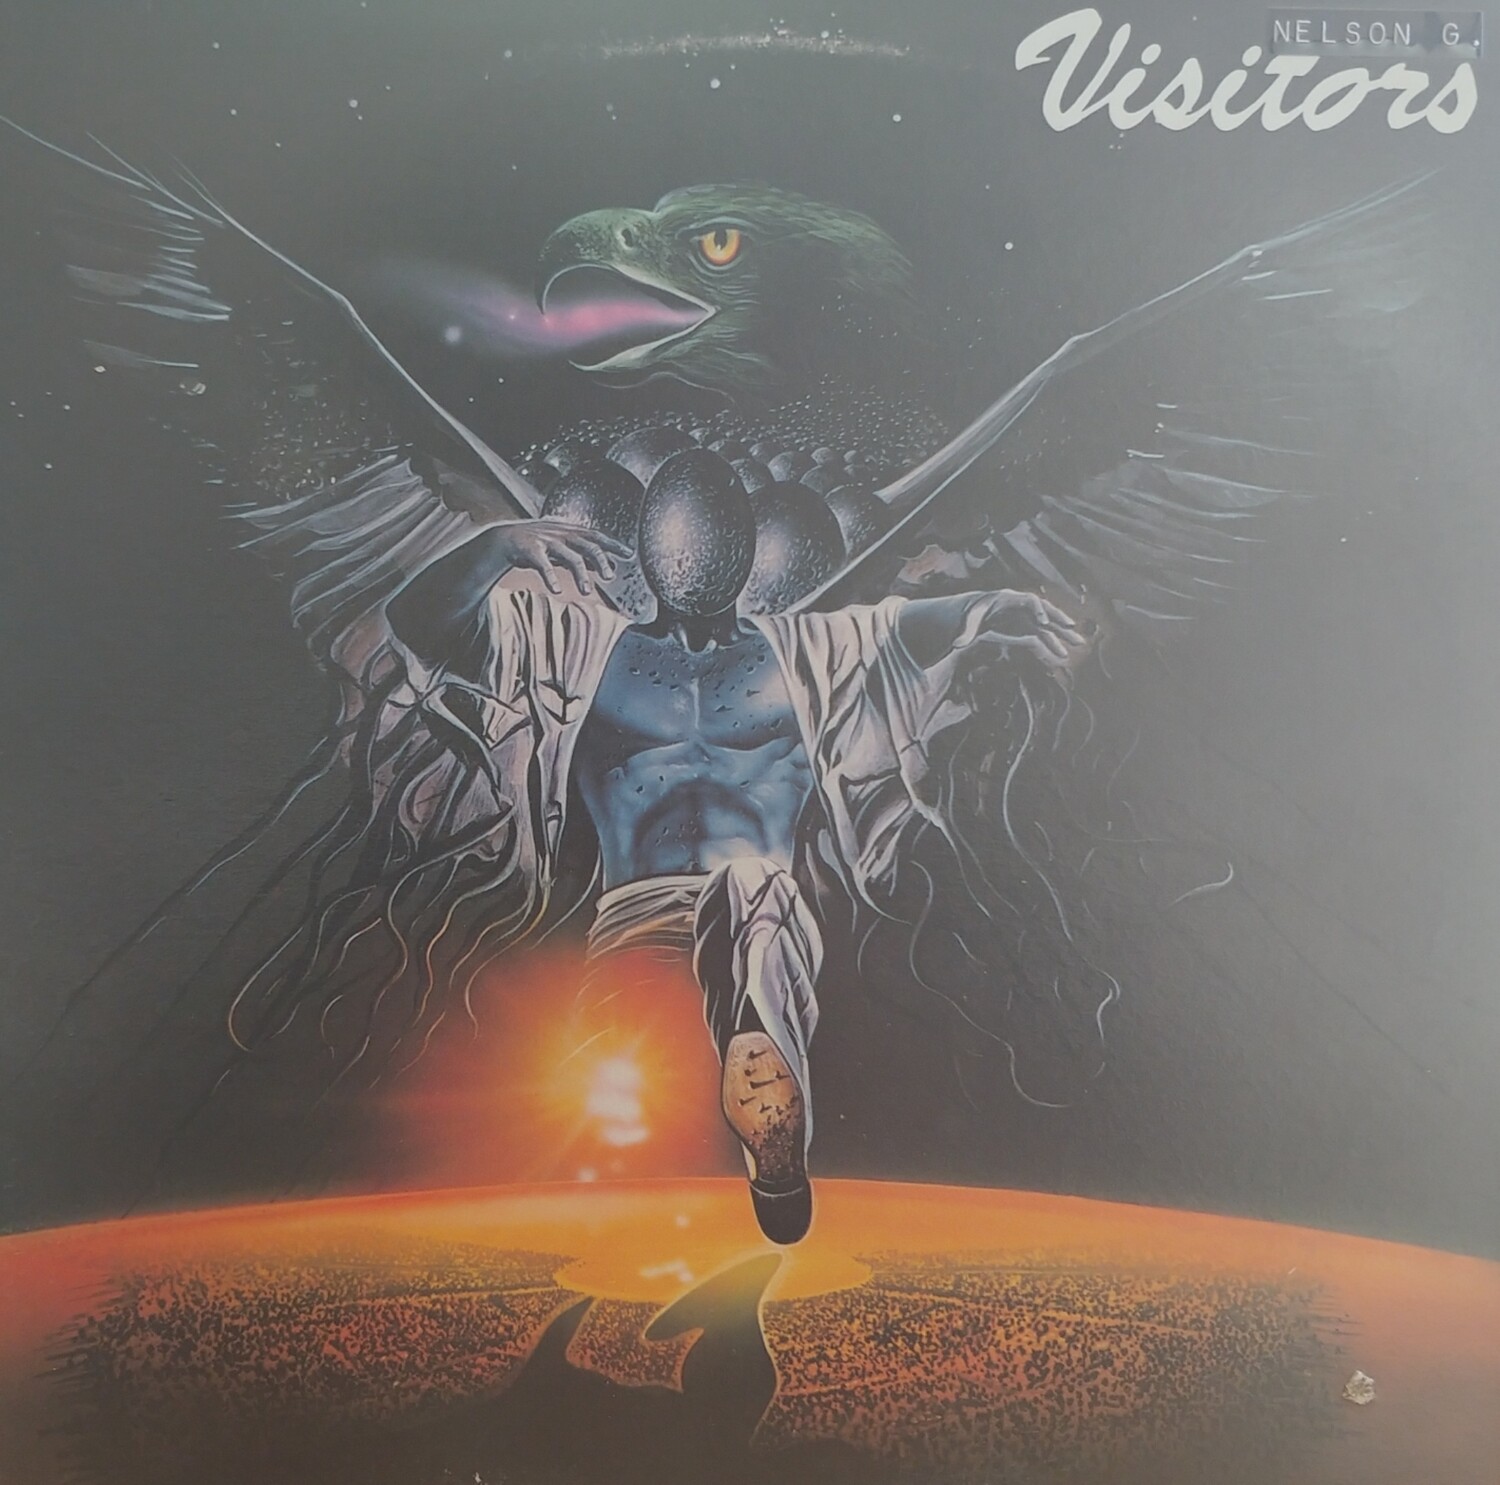 Visitors - Visitors